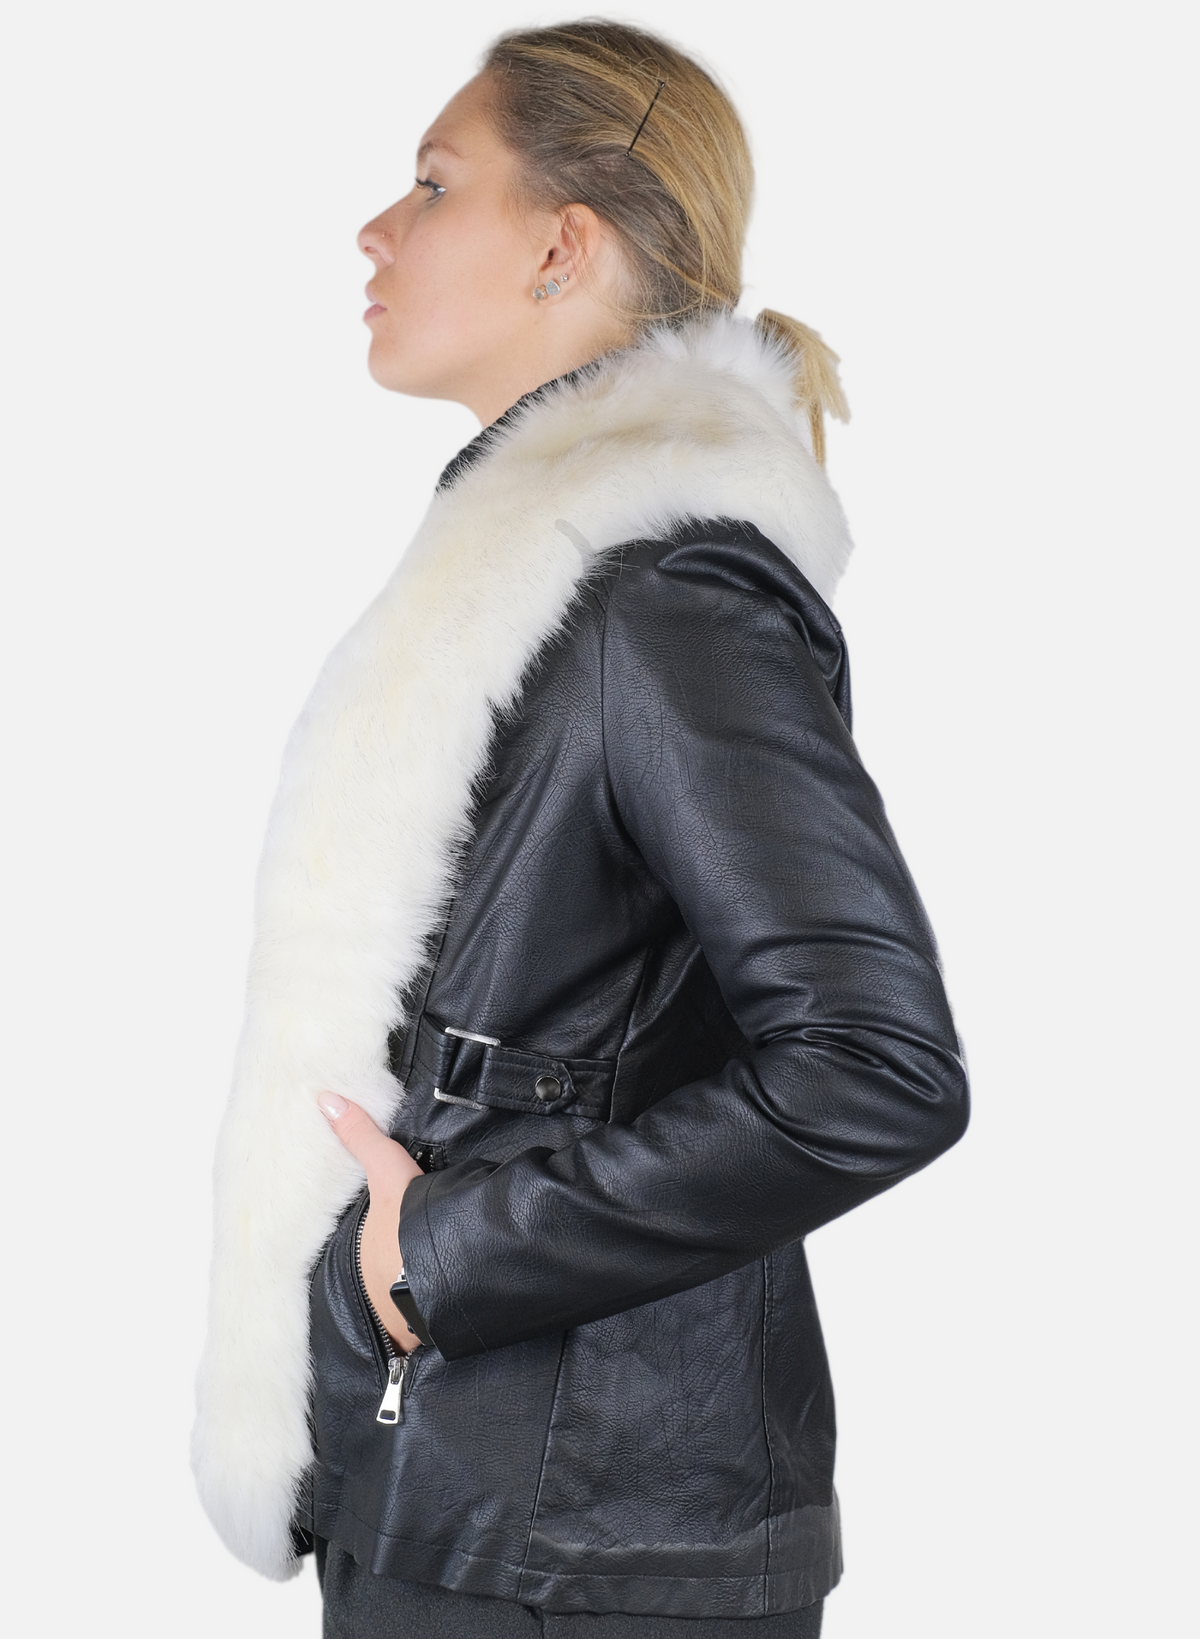 Women's jacket with fur neck